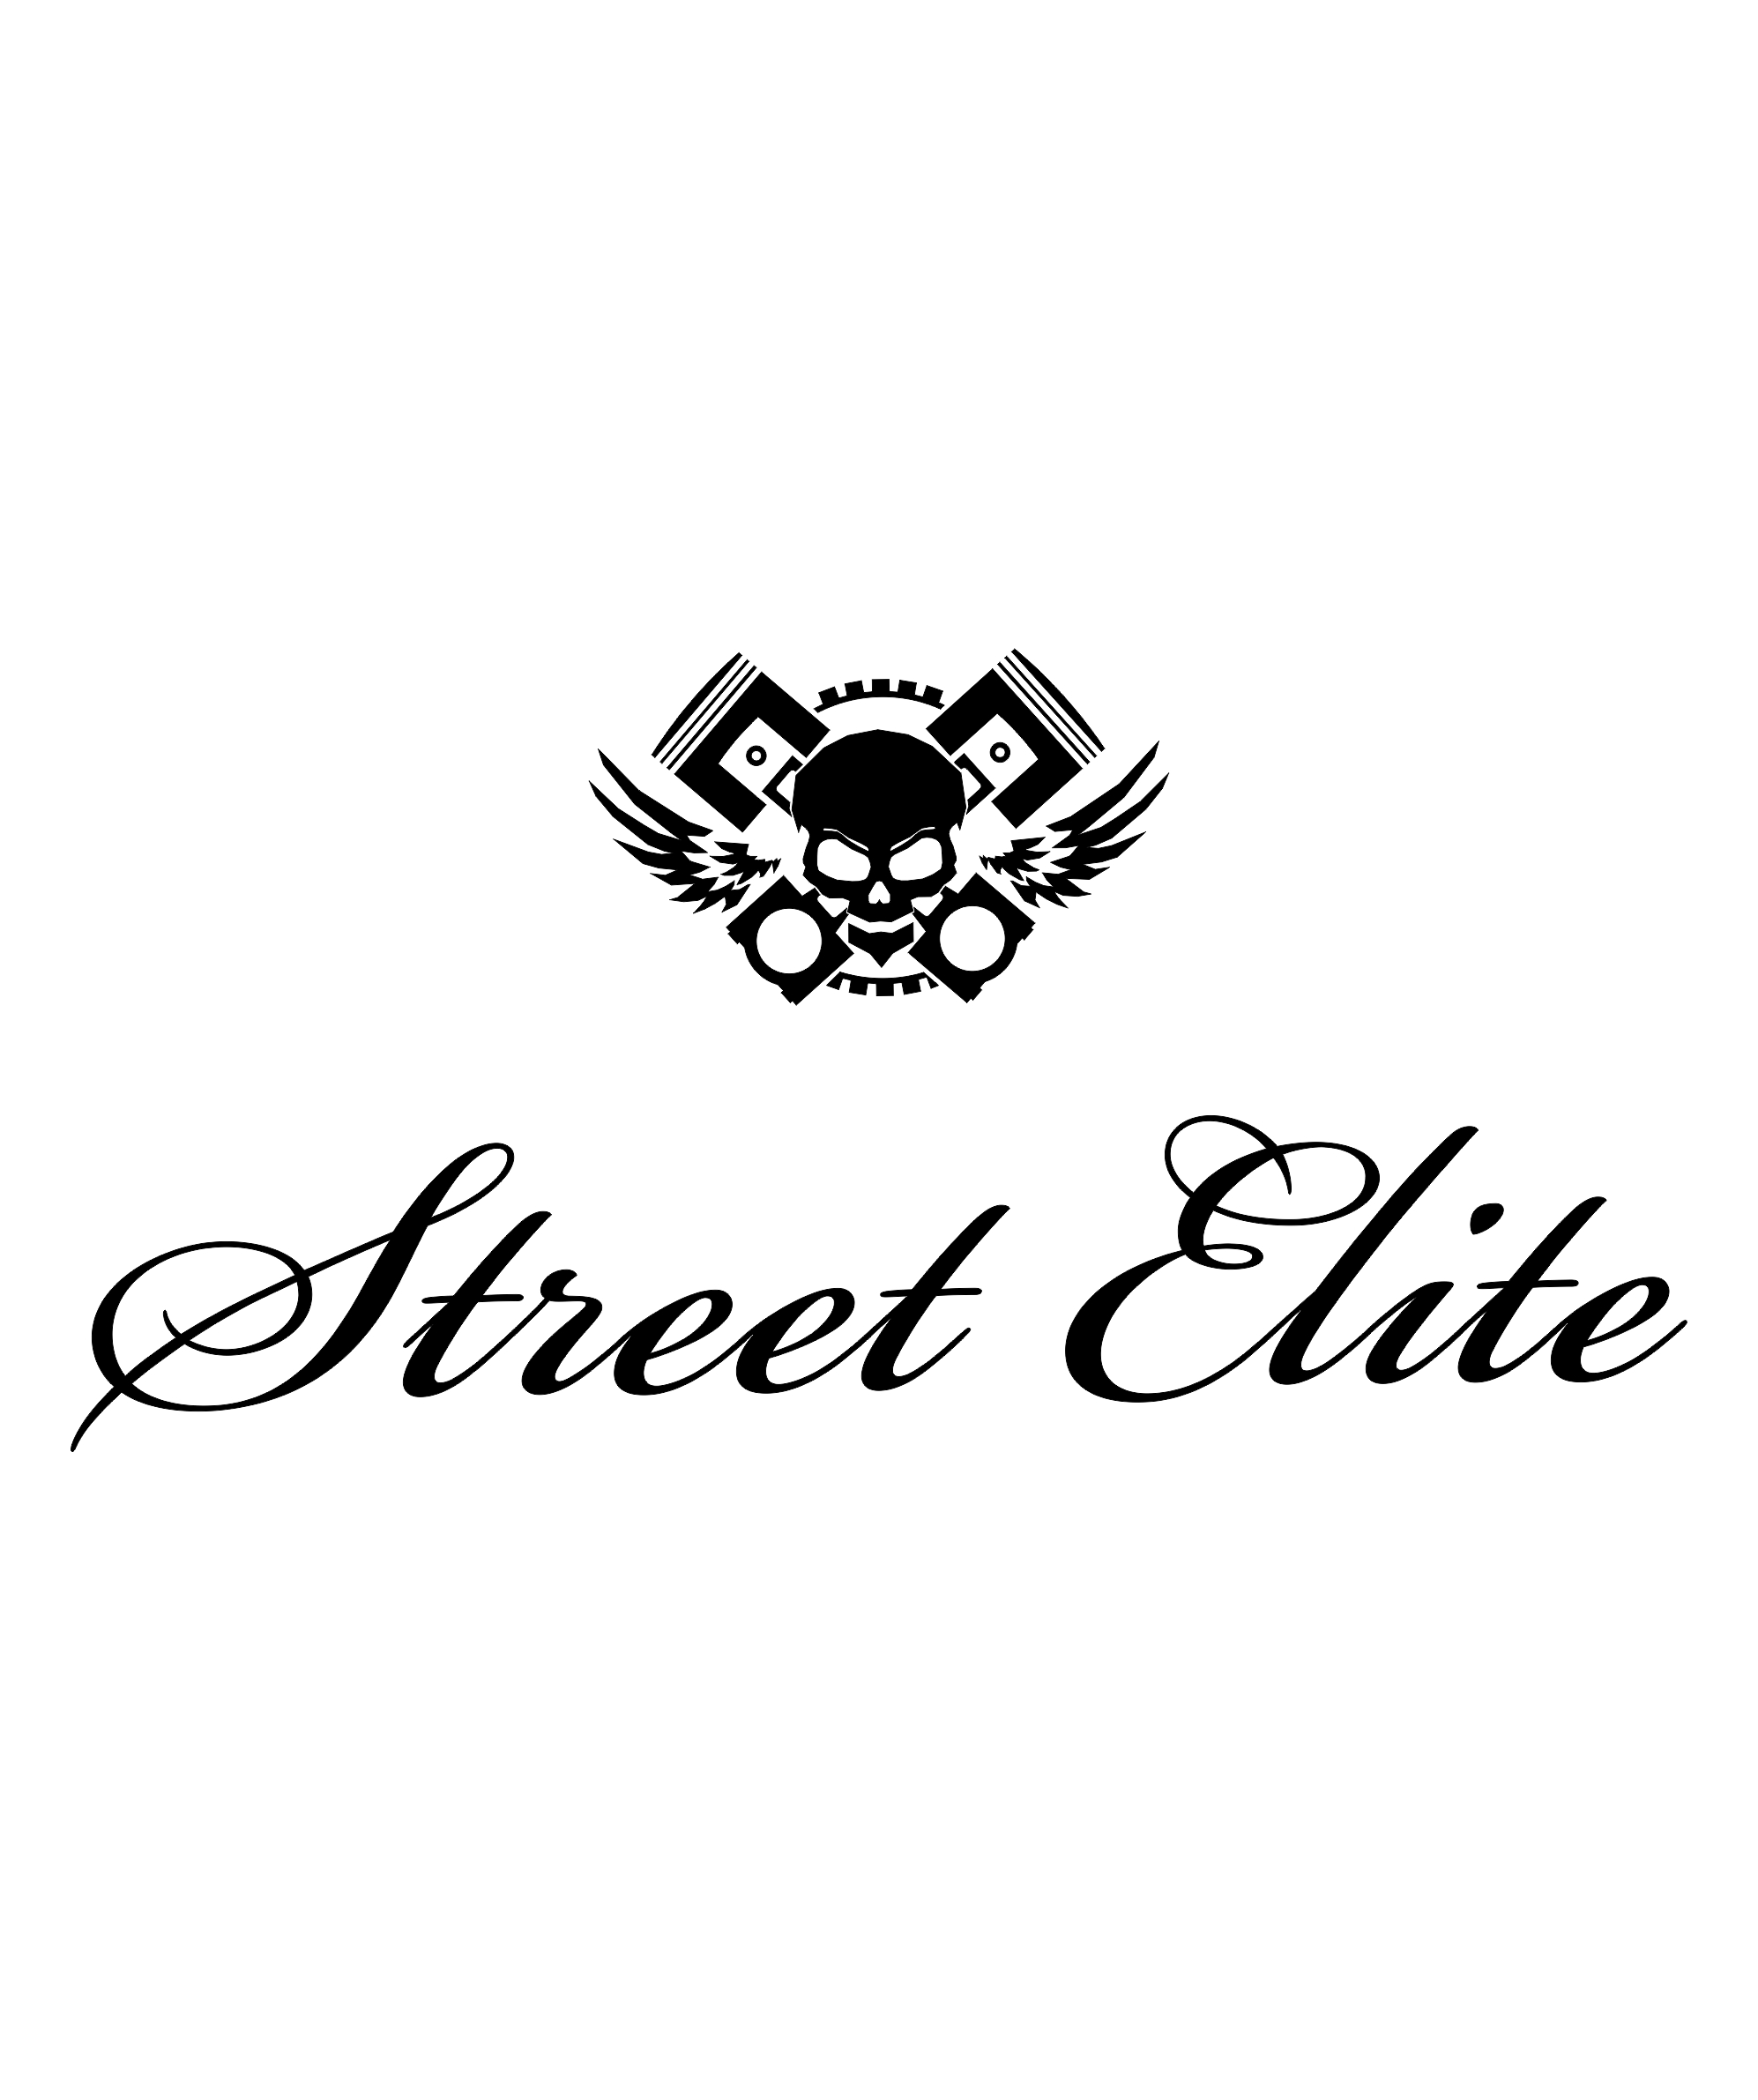 Street Elite